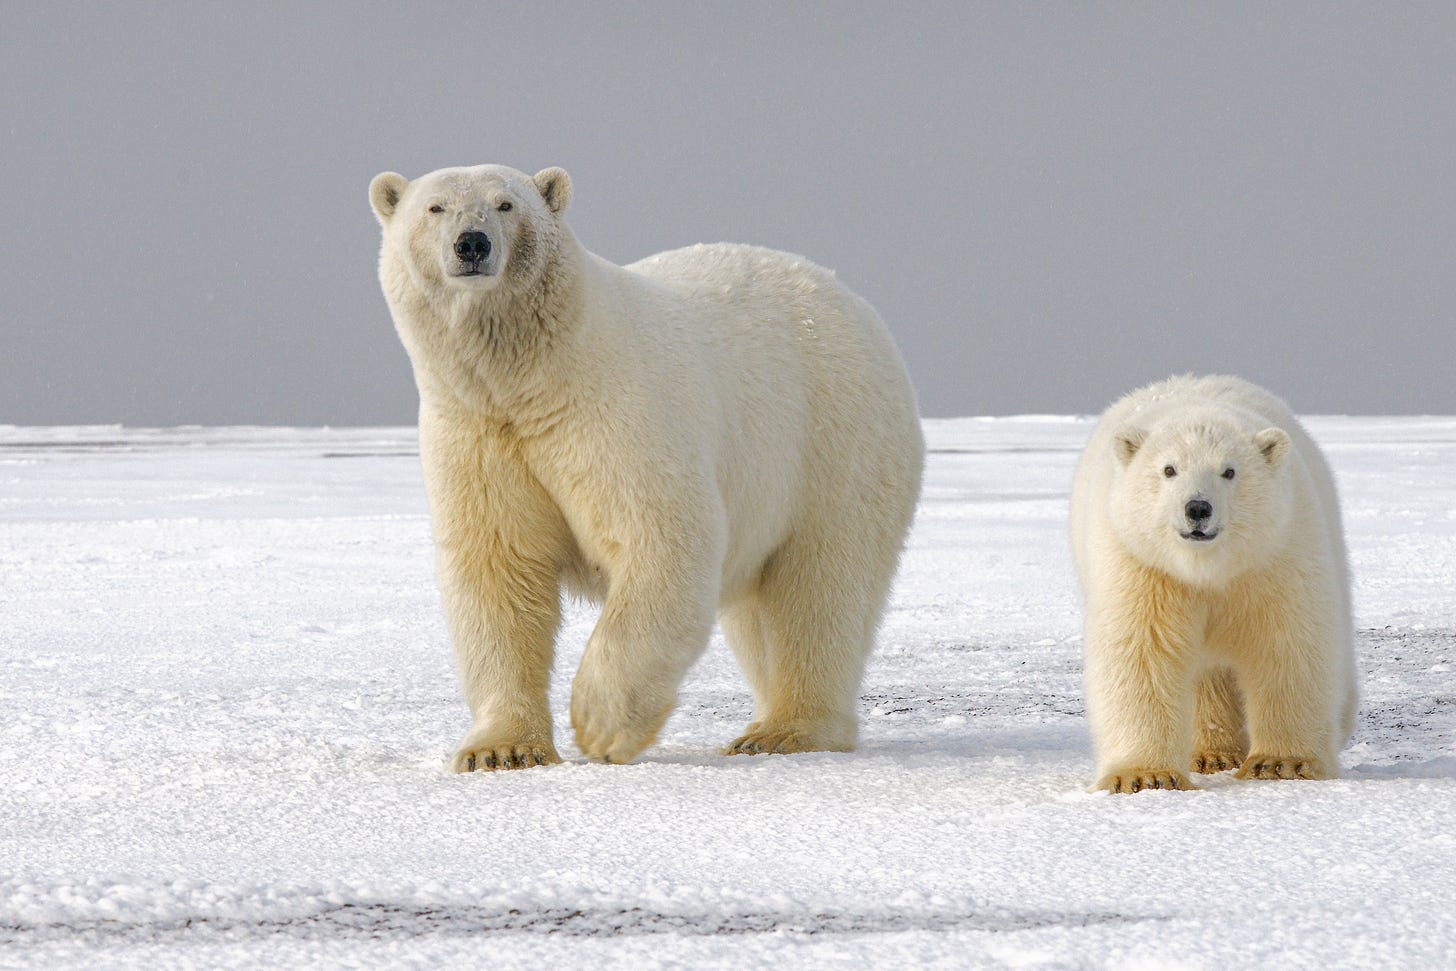 Two polar bears on the arctic ice.